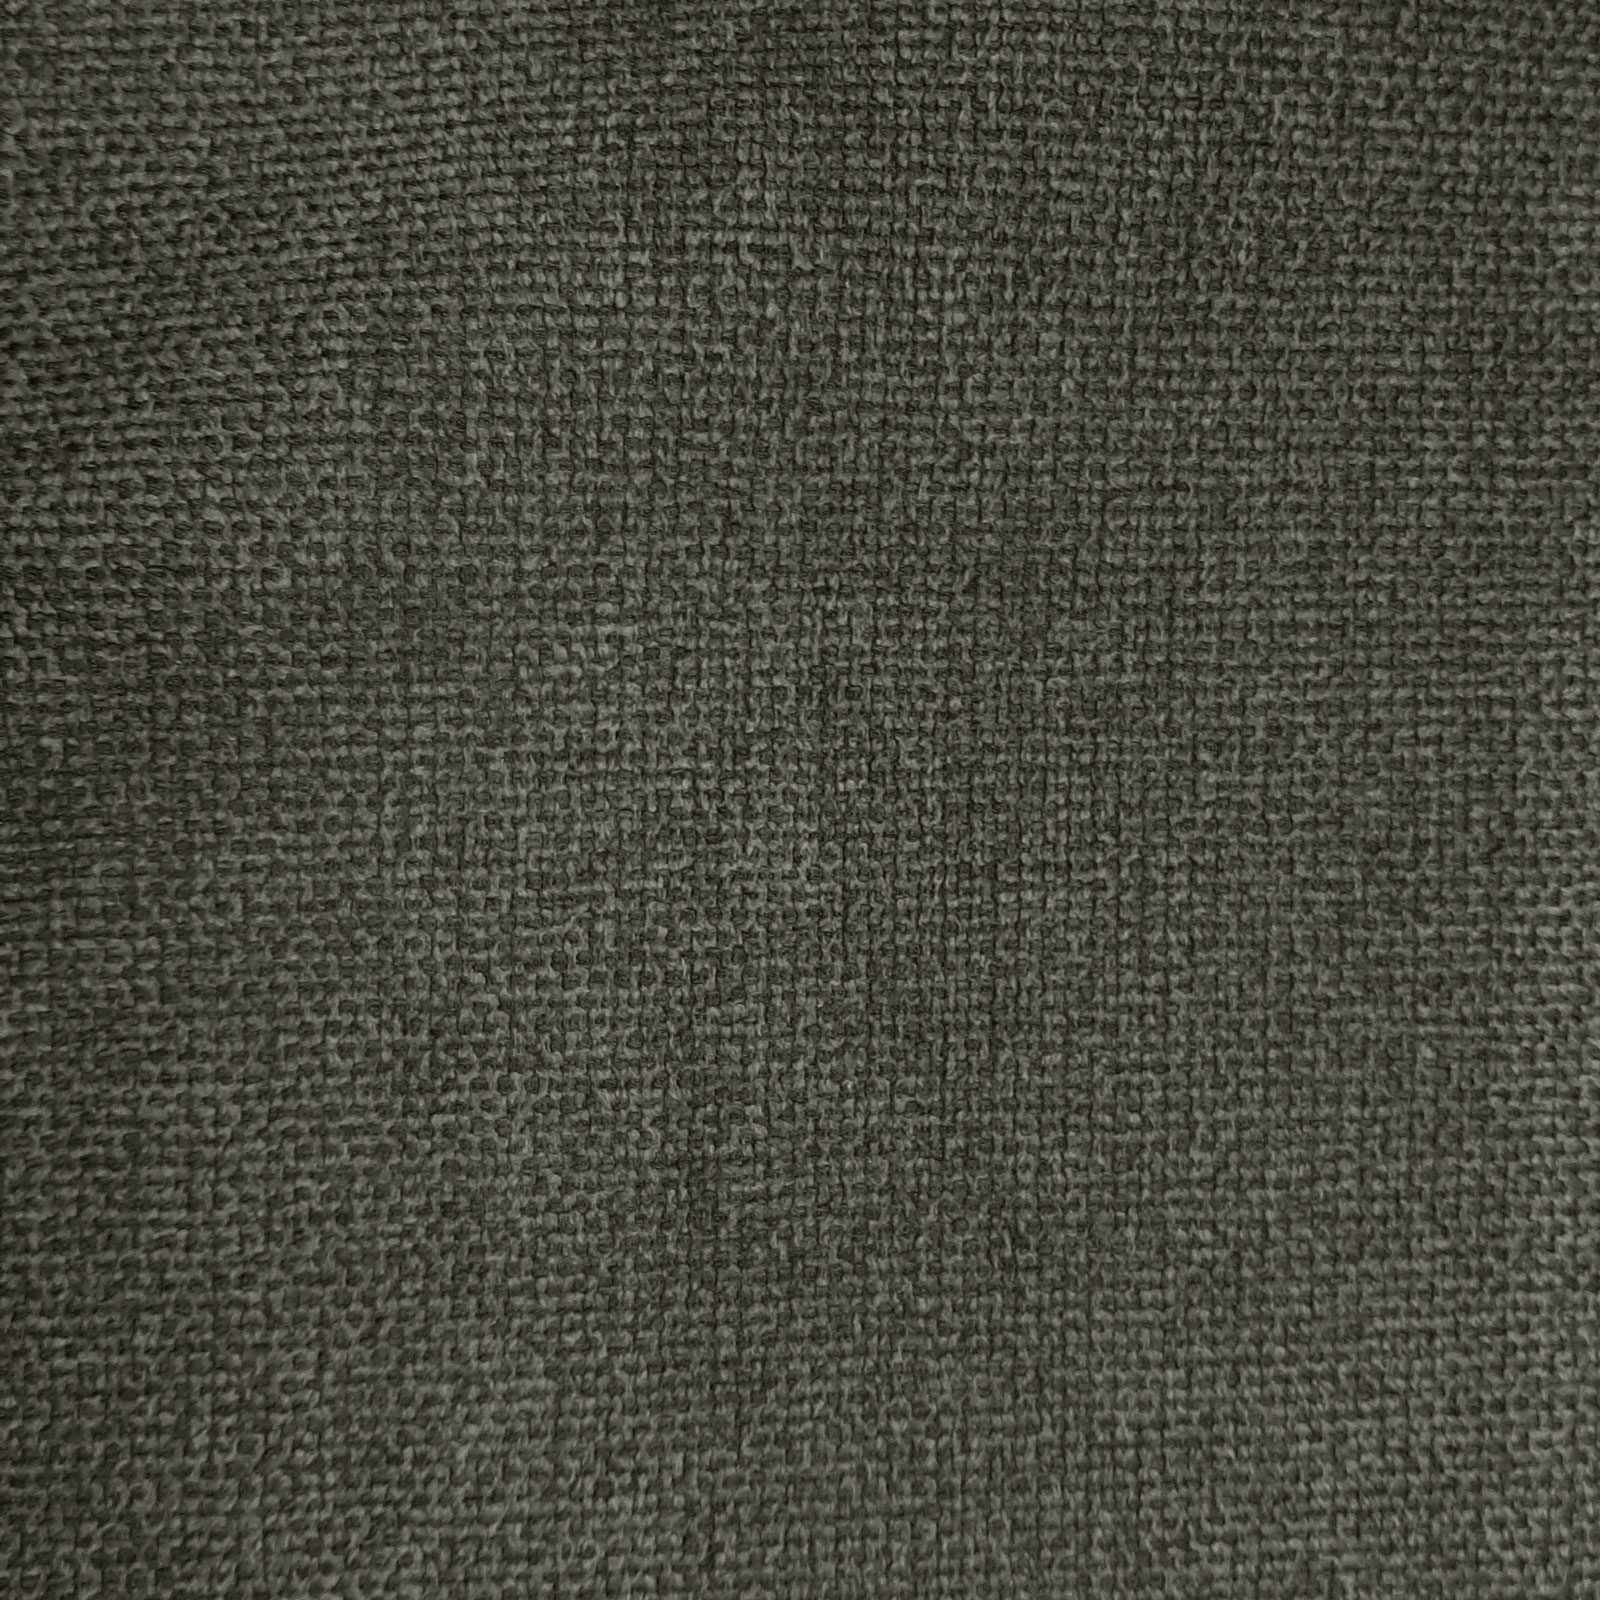 Paris - Oeko-Tex® upholstery fabric - flame retardant (DIN EN 1021-1) Anthracite Melange